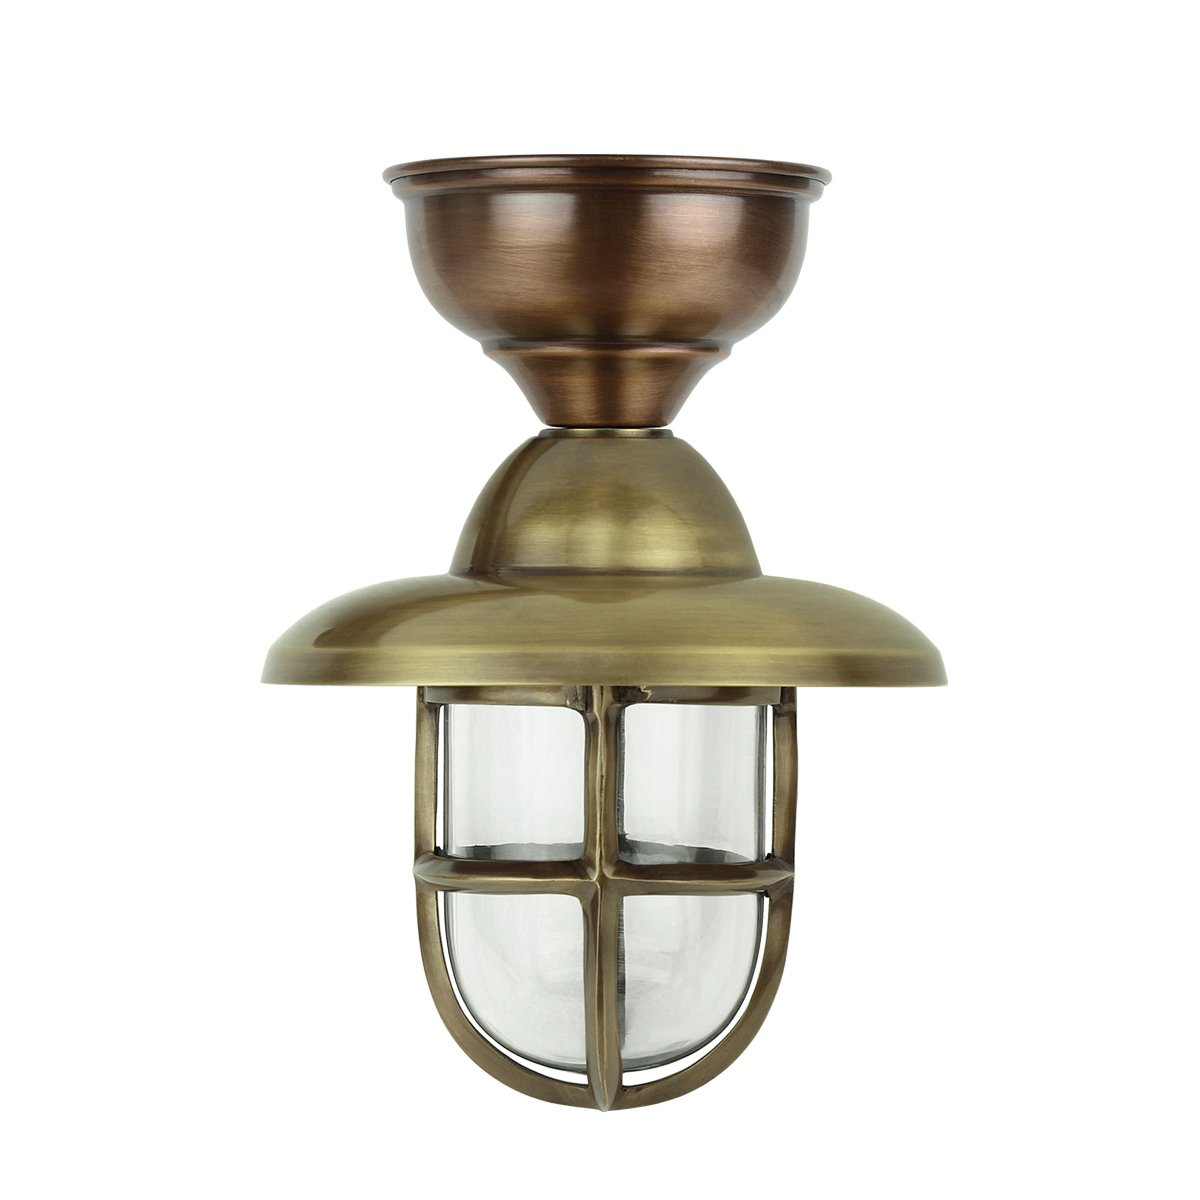 Outdoor Lighting Maritime Ship lamp Marine copper brass - 32 cm